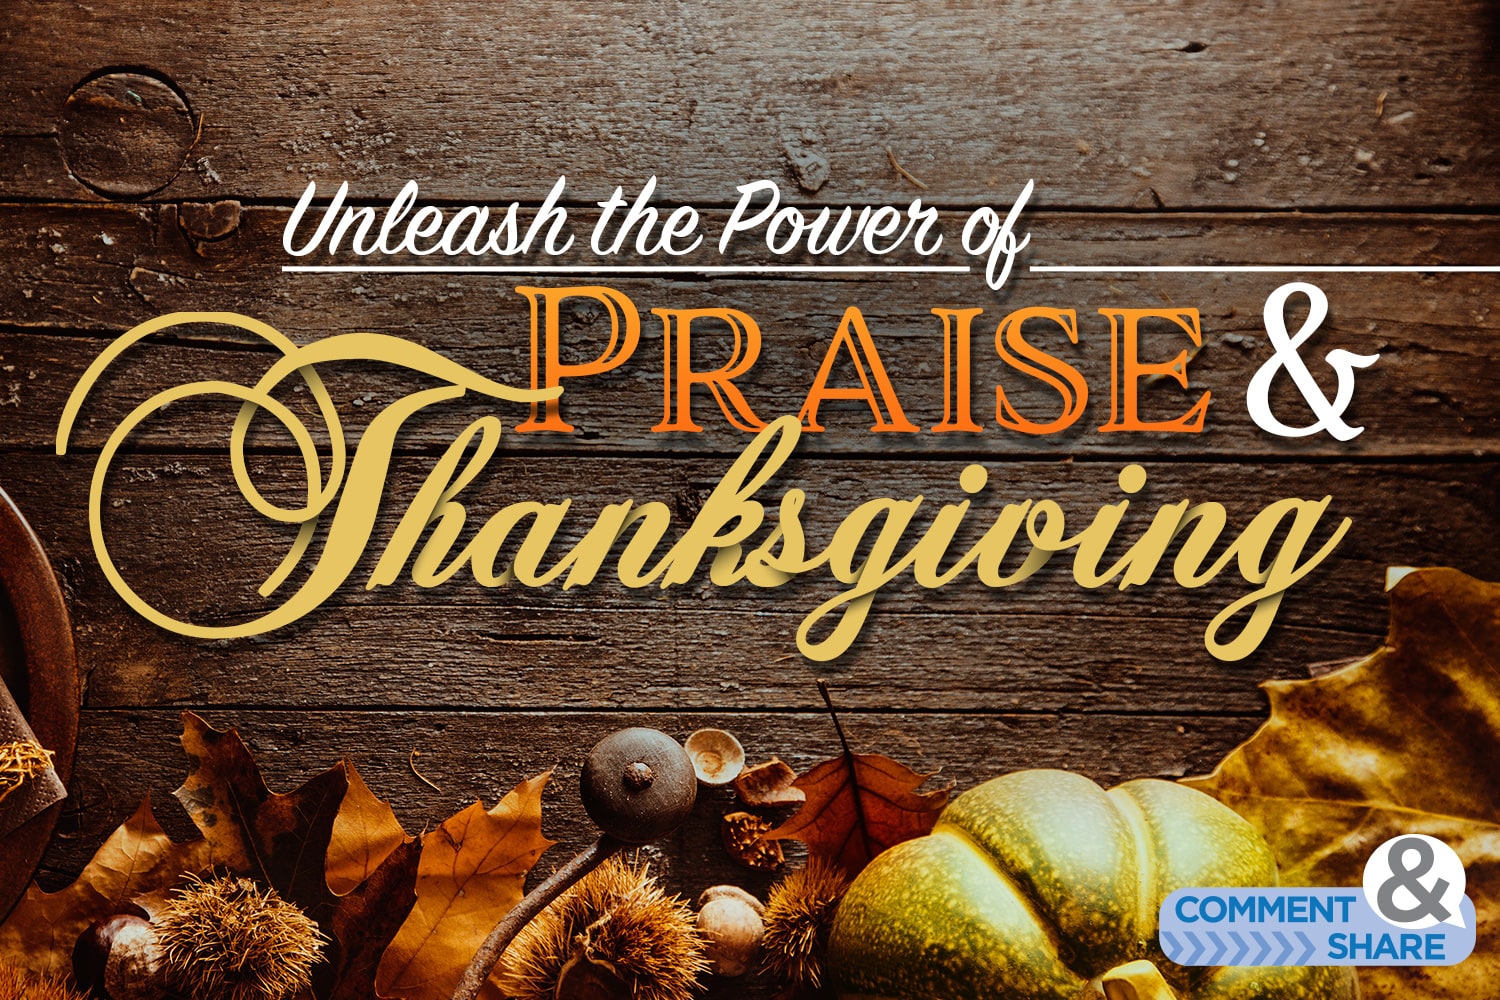 100 Praise Hymns for Thanksgiving